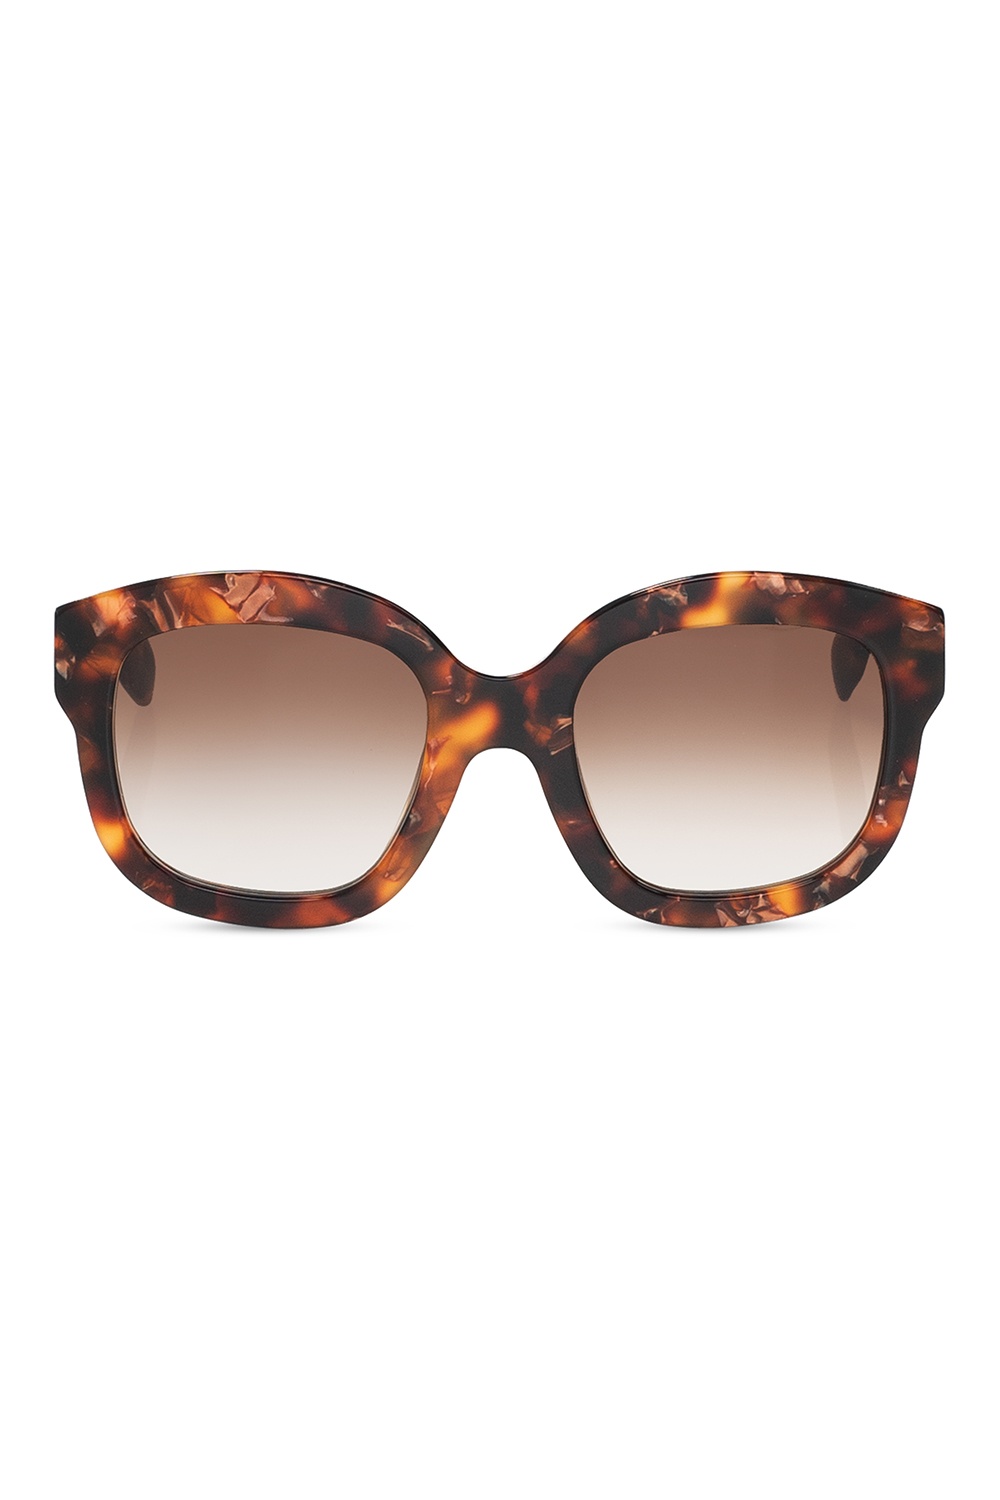 Emmanuelle Khanh sunglasses Williamson with logo